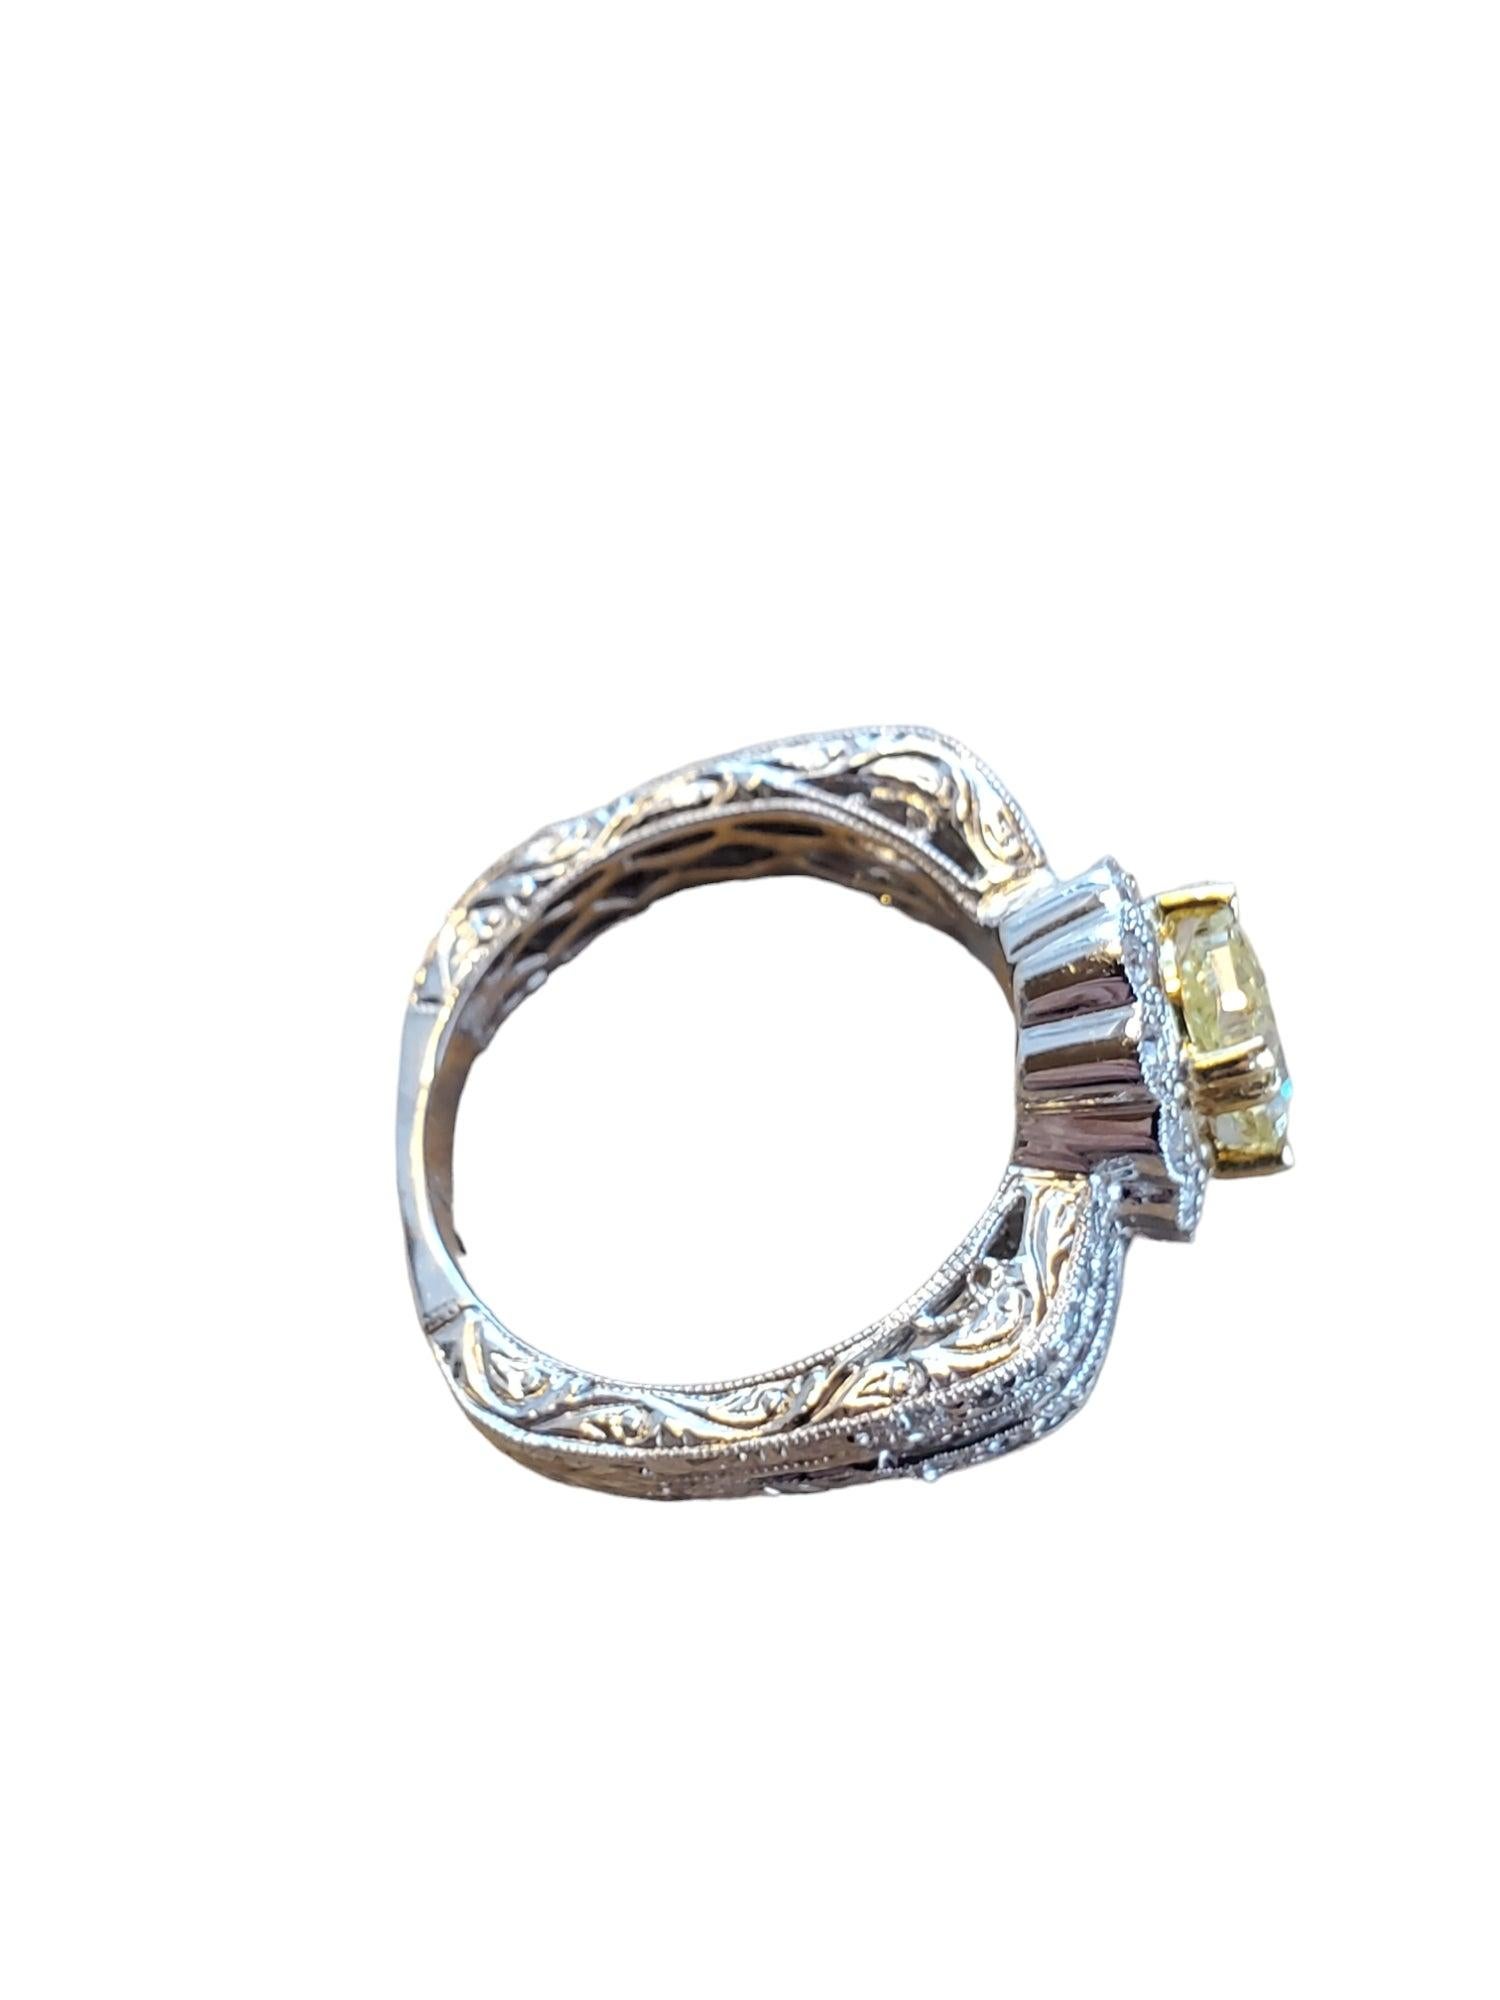 Cushion Cut Fancy Yellow Diamond Ring 2.25tcw Euro Shank 18k White Gold Ring 1.65ct Center For Sale